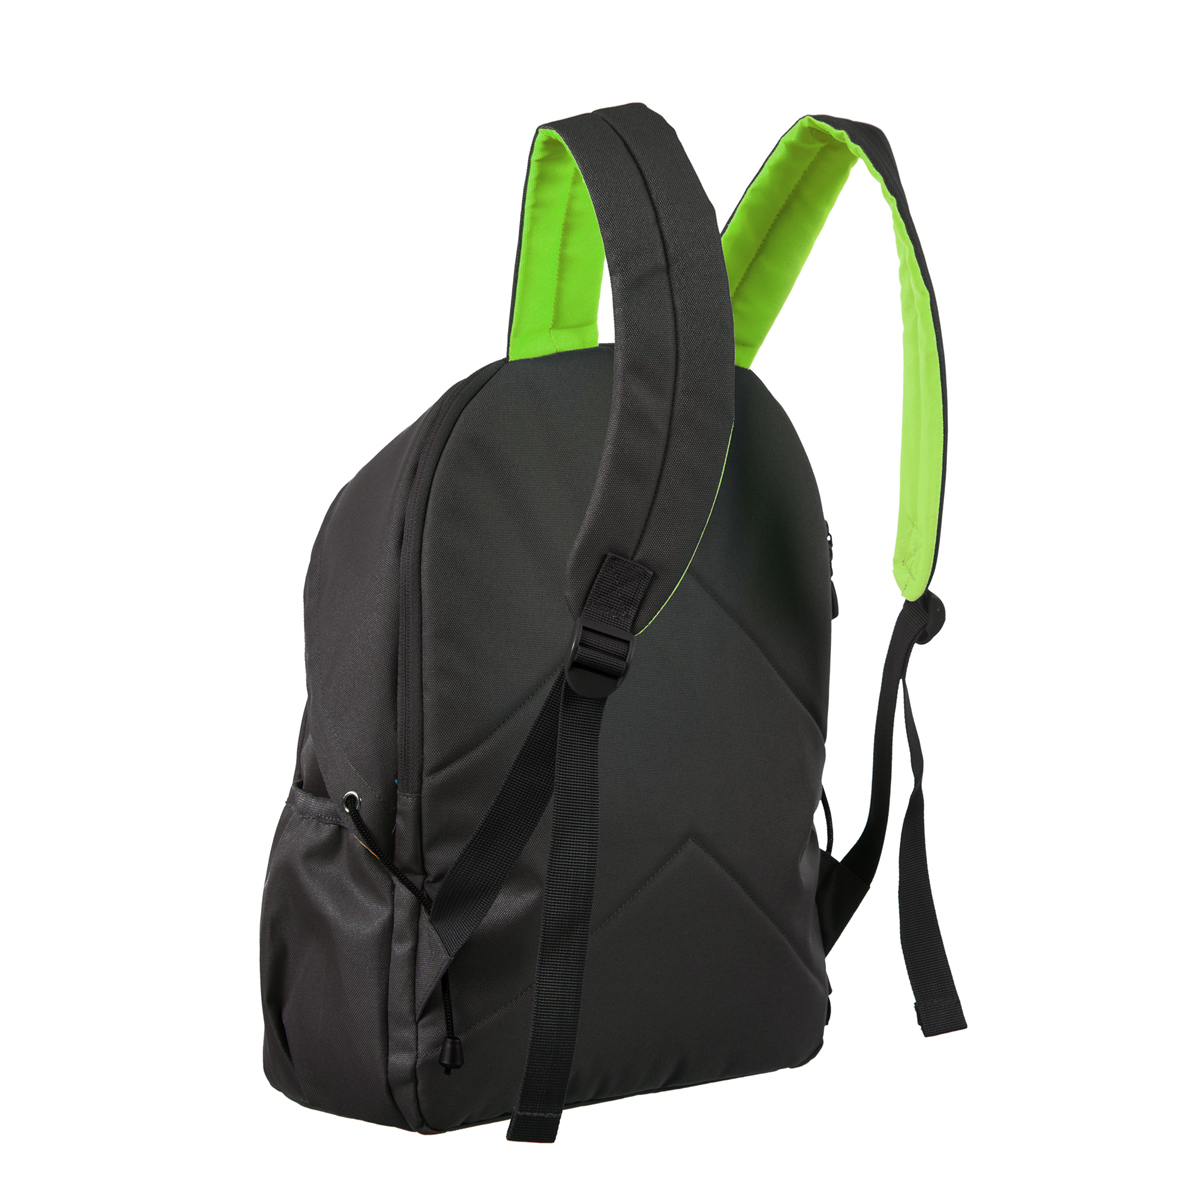 ZIPIT Grillz Backpack for Boys Elementary School & Preschool, Cute Book Bag for Kids (Black) - image 6 of 10